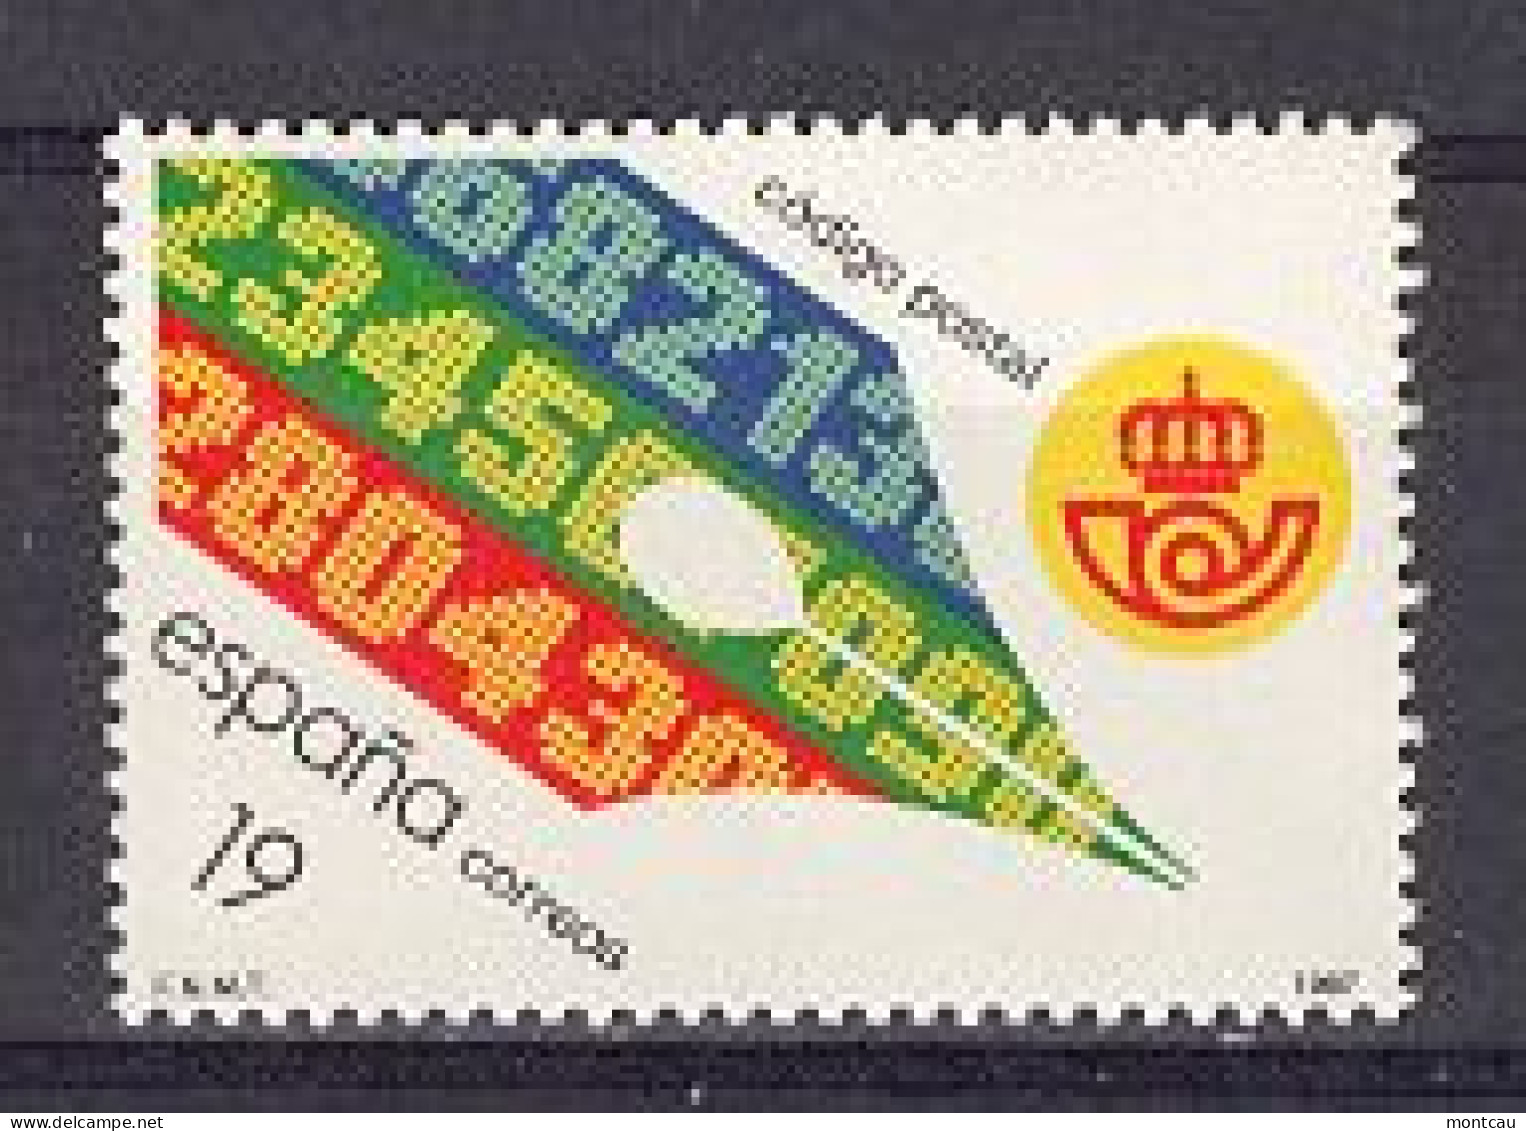 Spain 1987. Codigo Postal Ed 2906 (**) - Codice Postale